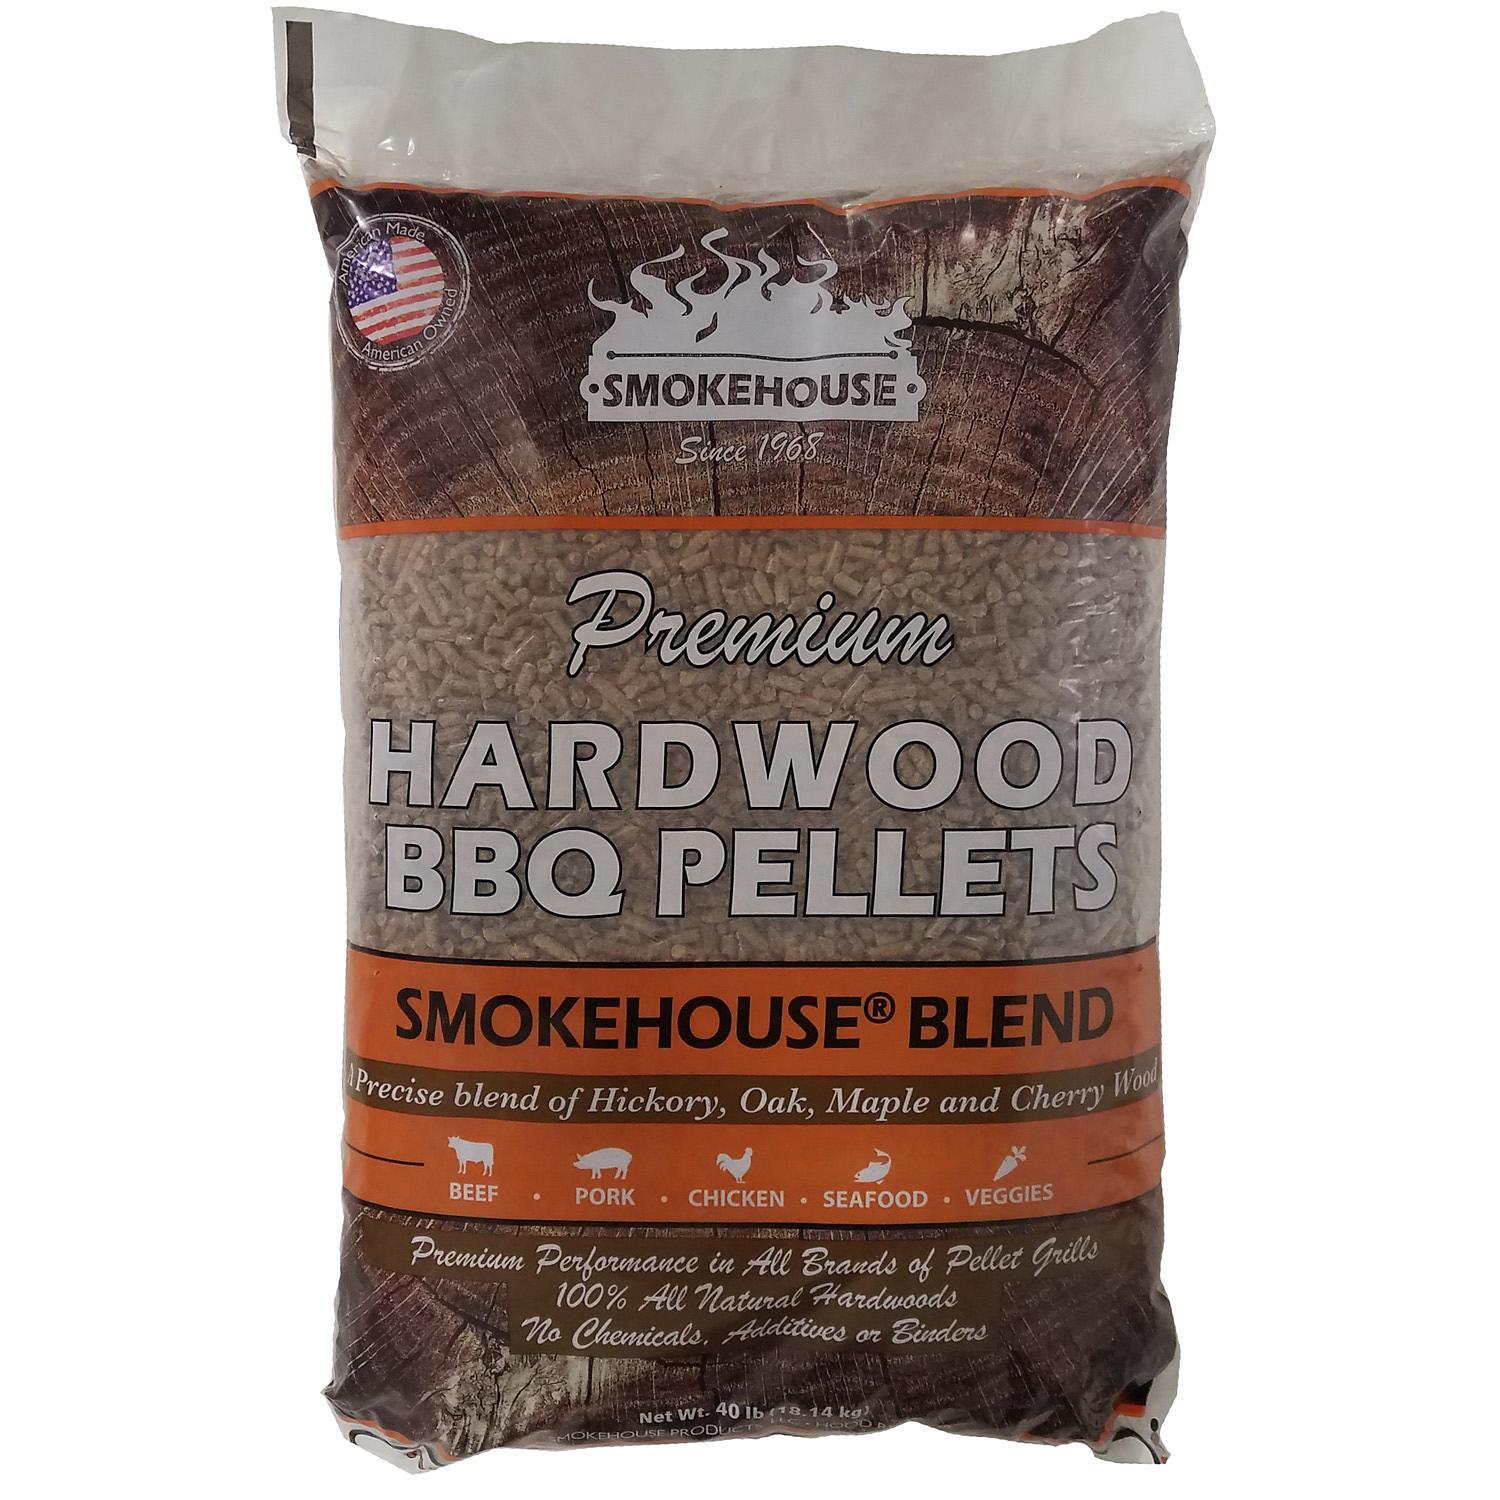 Smokehouse Products Premium Hardwood BBQ Pellets, Smokehouse Blend - 40 Pounds